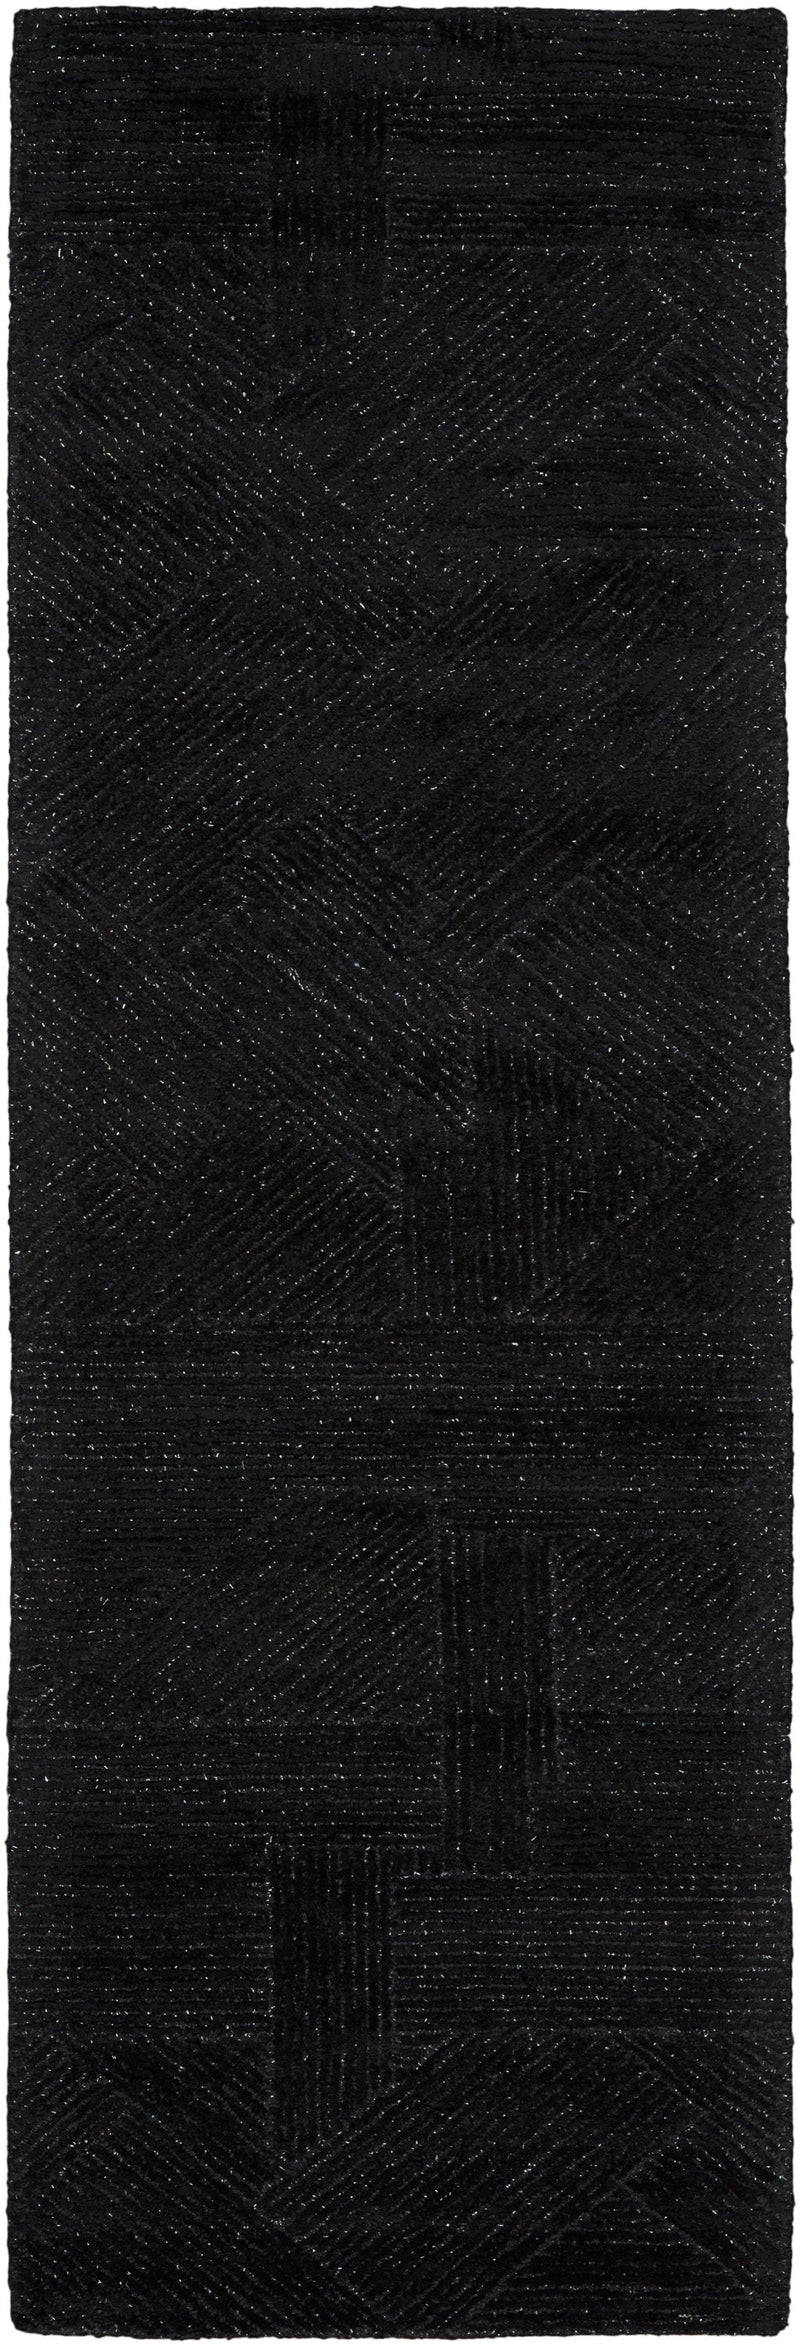 media image for ma30 star handmade black rug by nourison 99446880871 redo 2 296